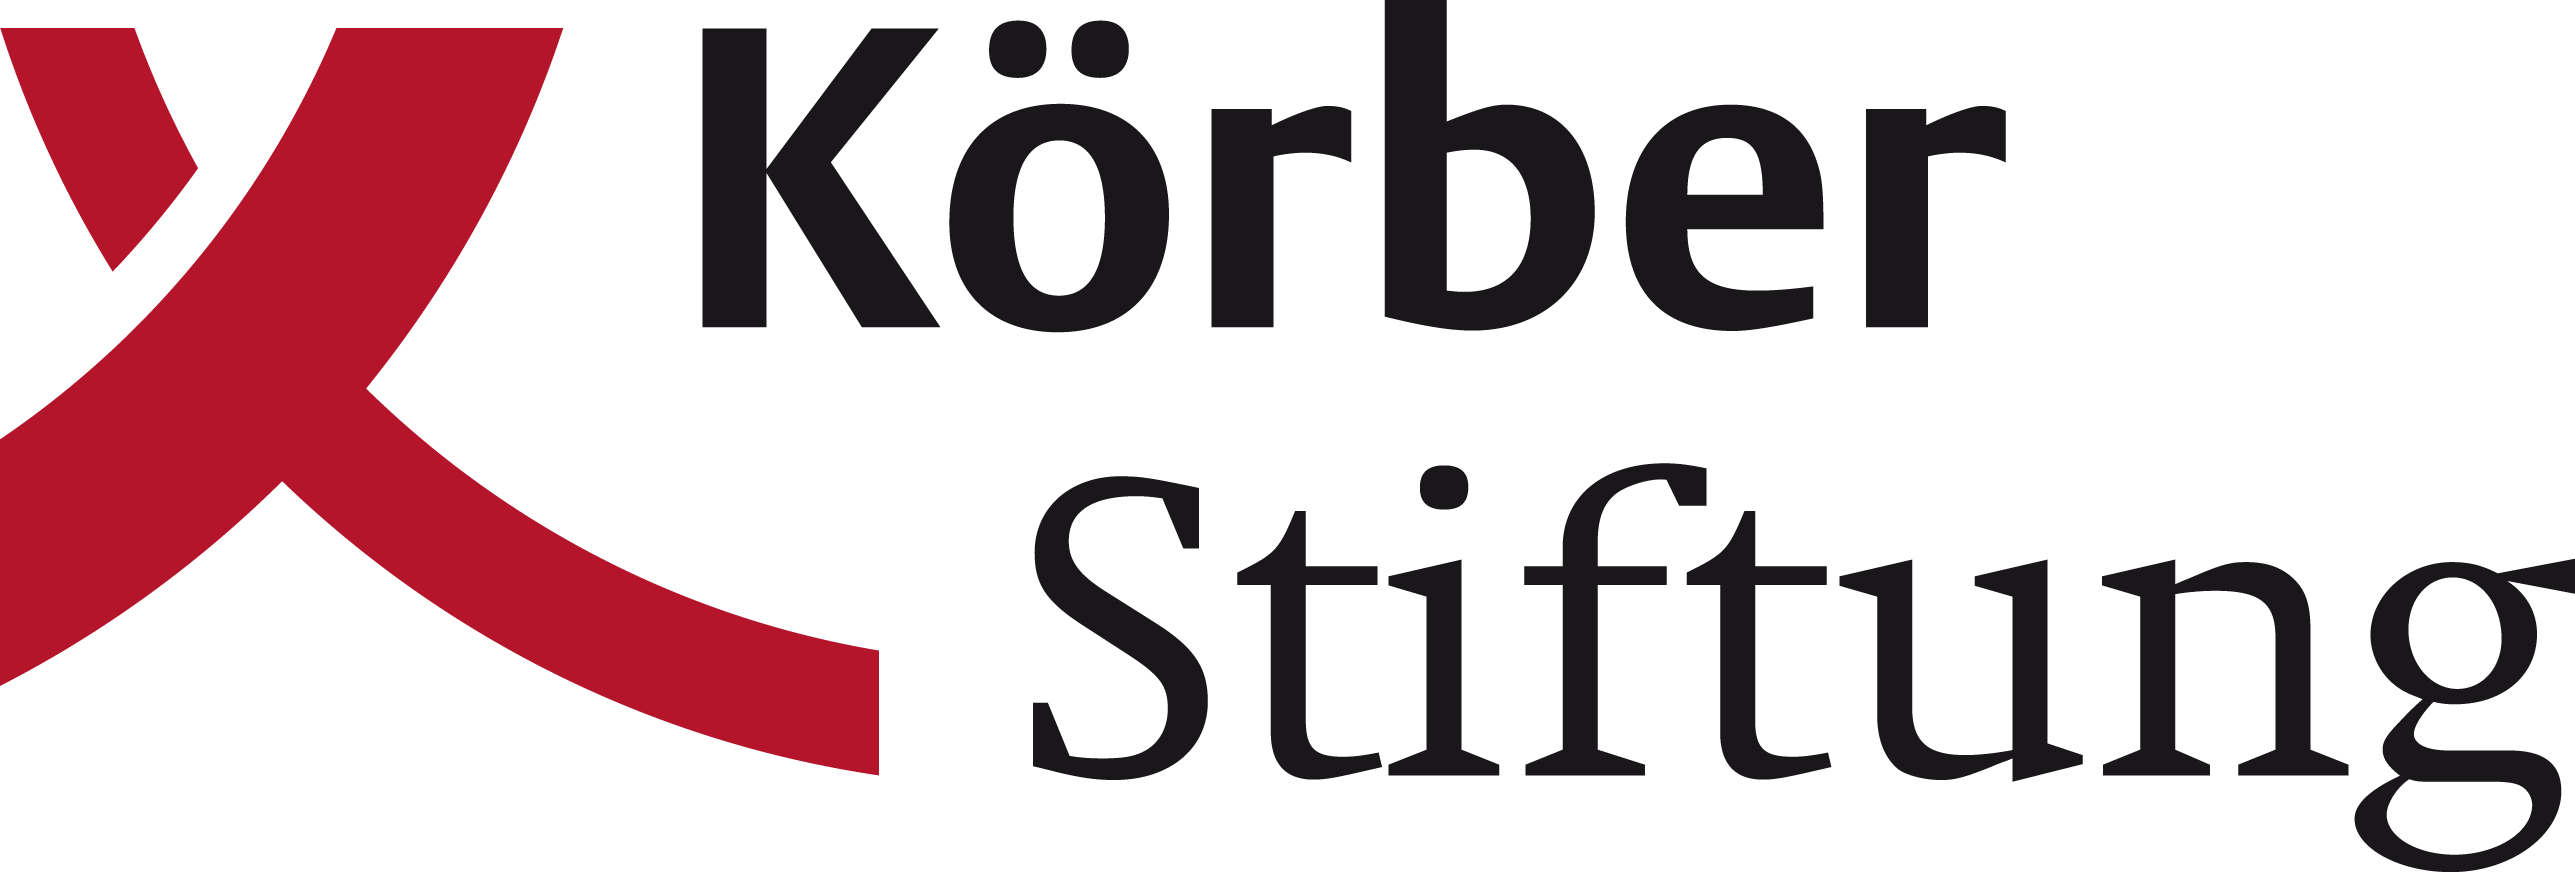 Logo_Koerber Stiftung_rgb.png